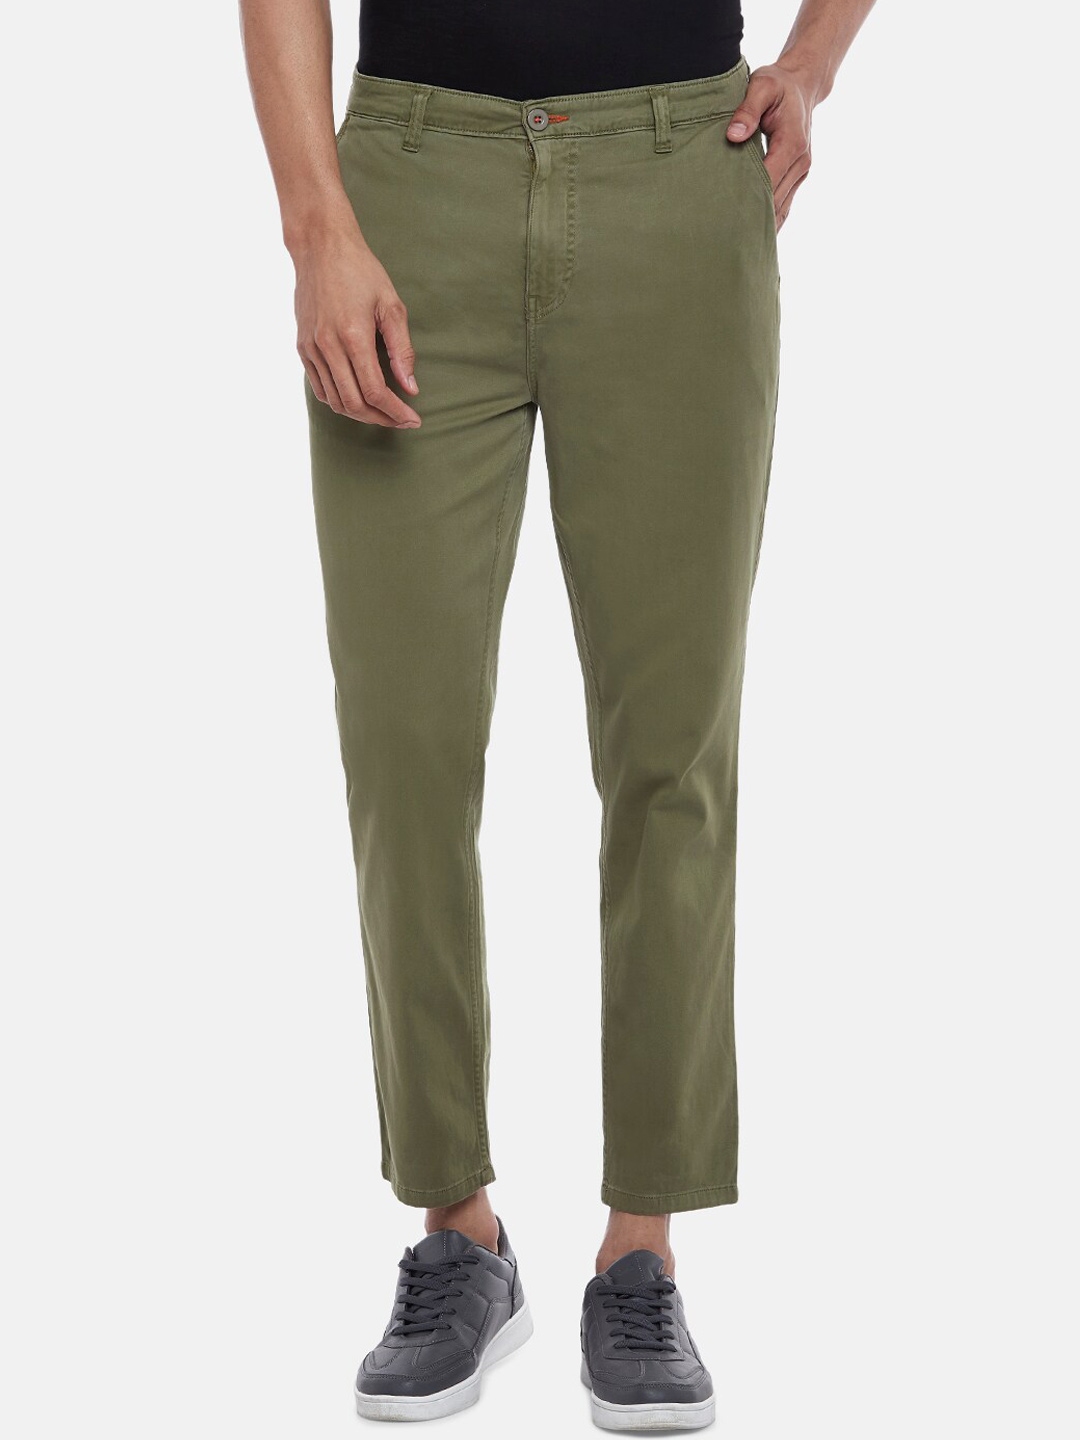 Buy Urban Ranger By Pantaloons Men Olive Green Slim Fit Pure Cotton ...